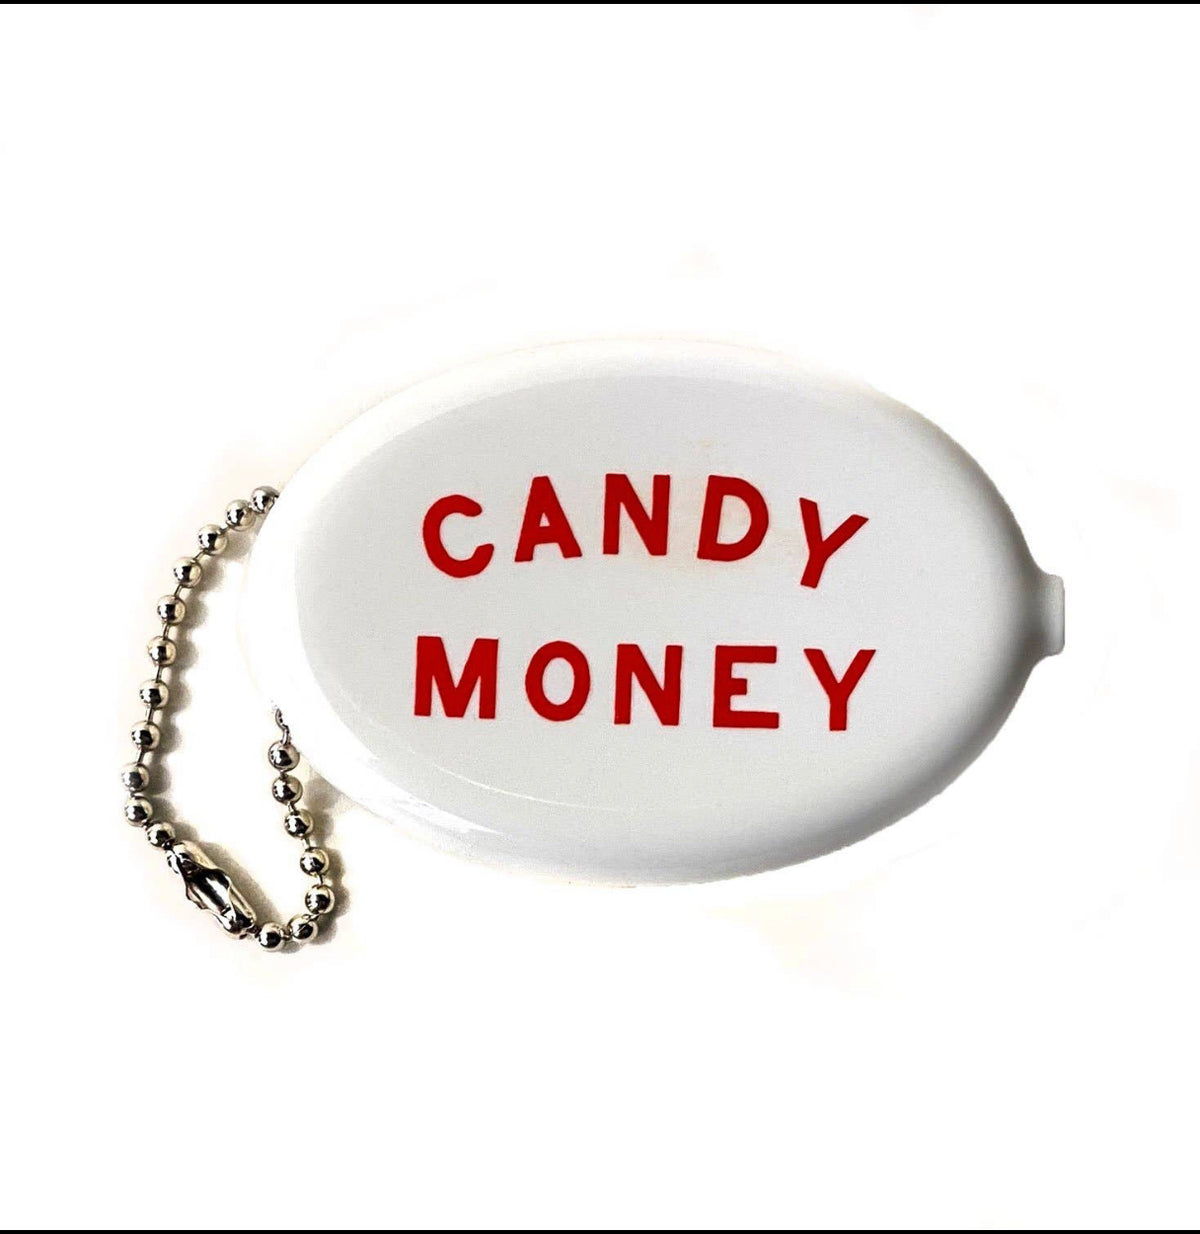 Candy money key chain coin purse